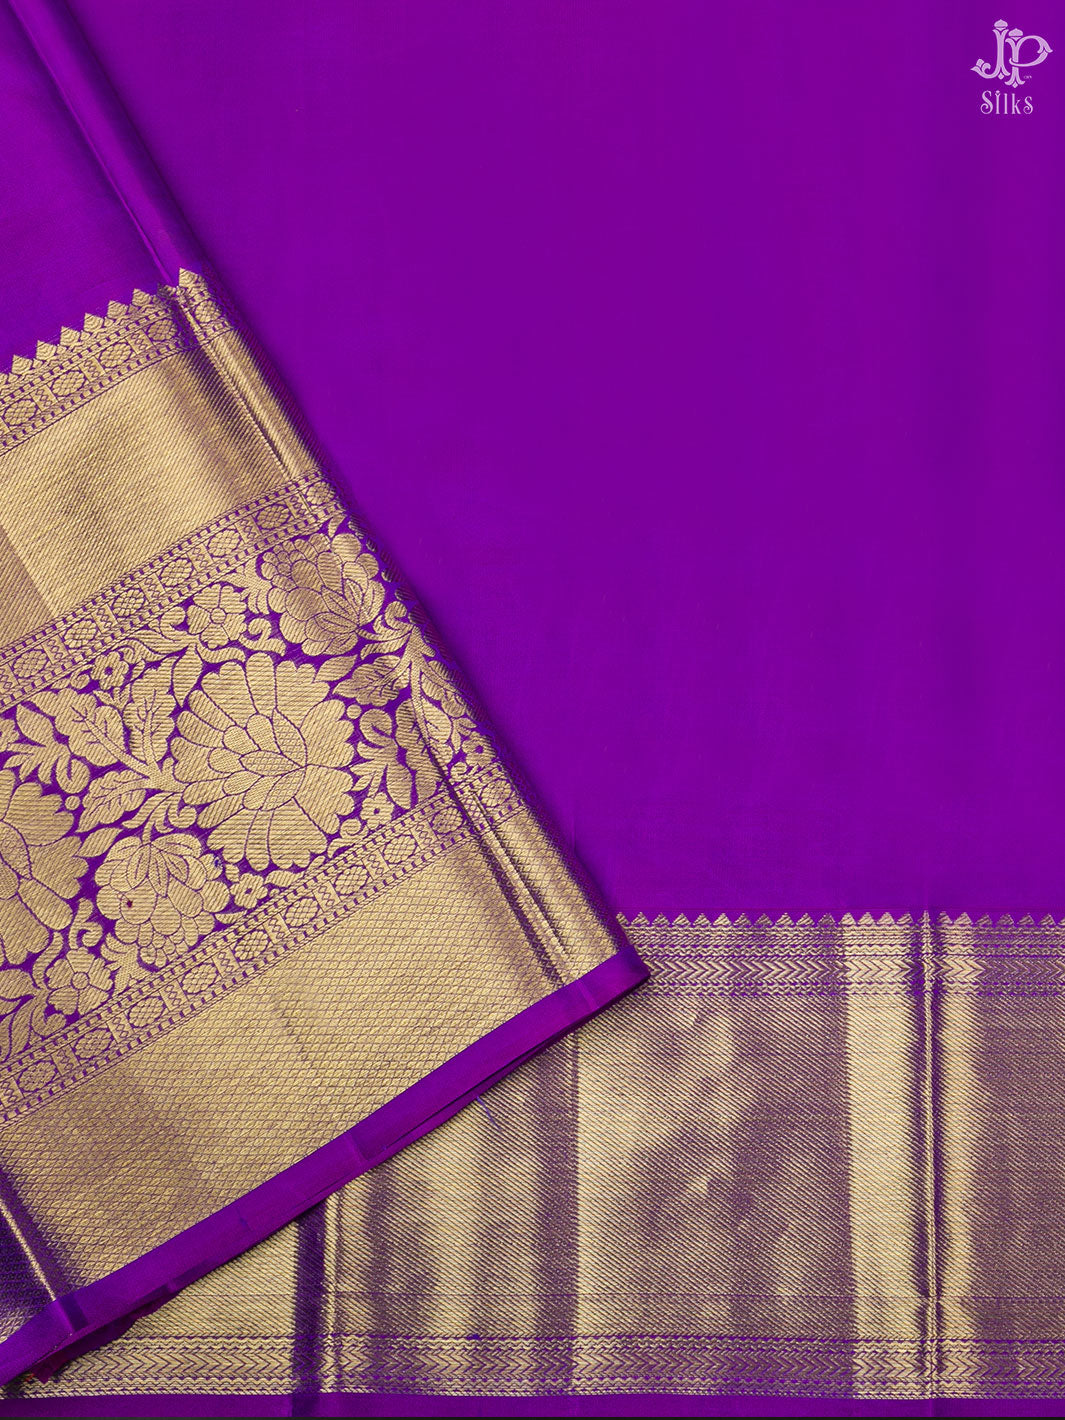 Teal Blue and Purple Kanchipuram Silk Saree - D1070 - View 4